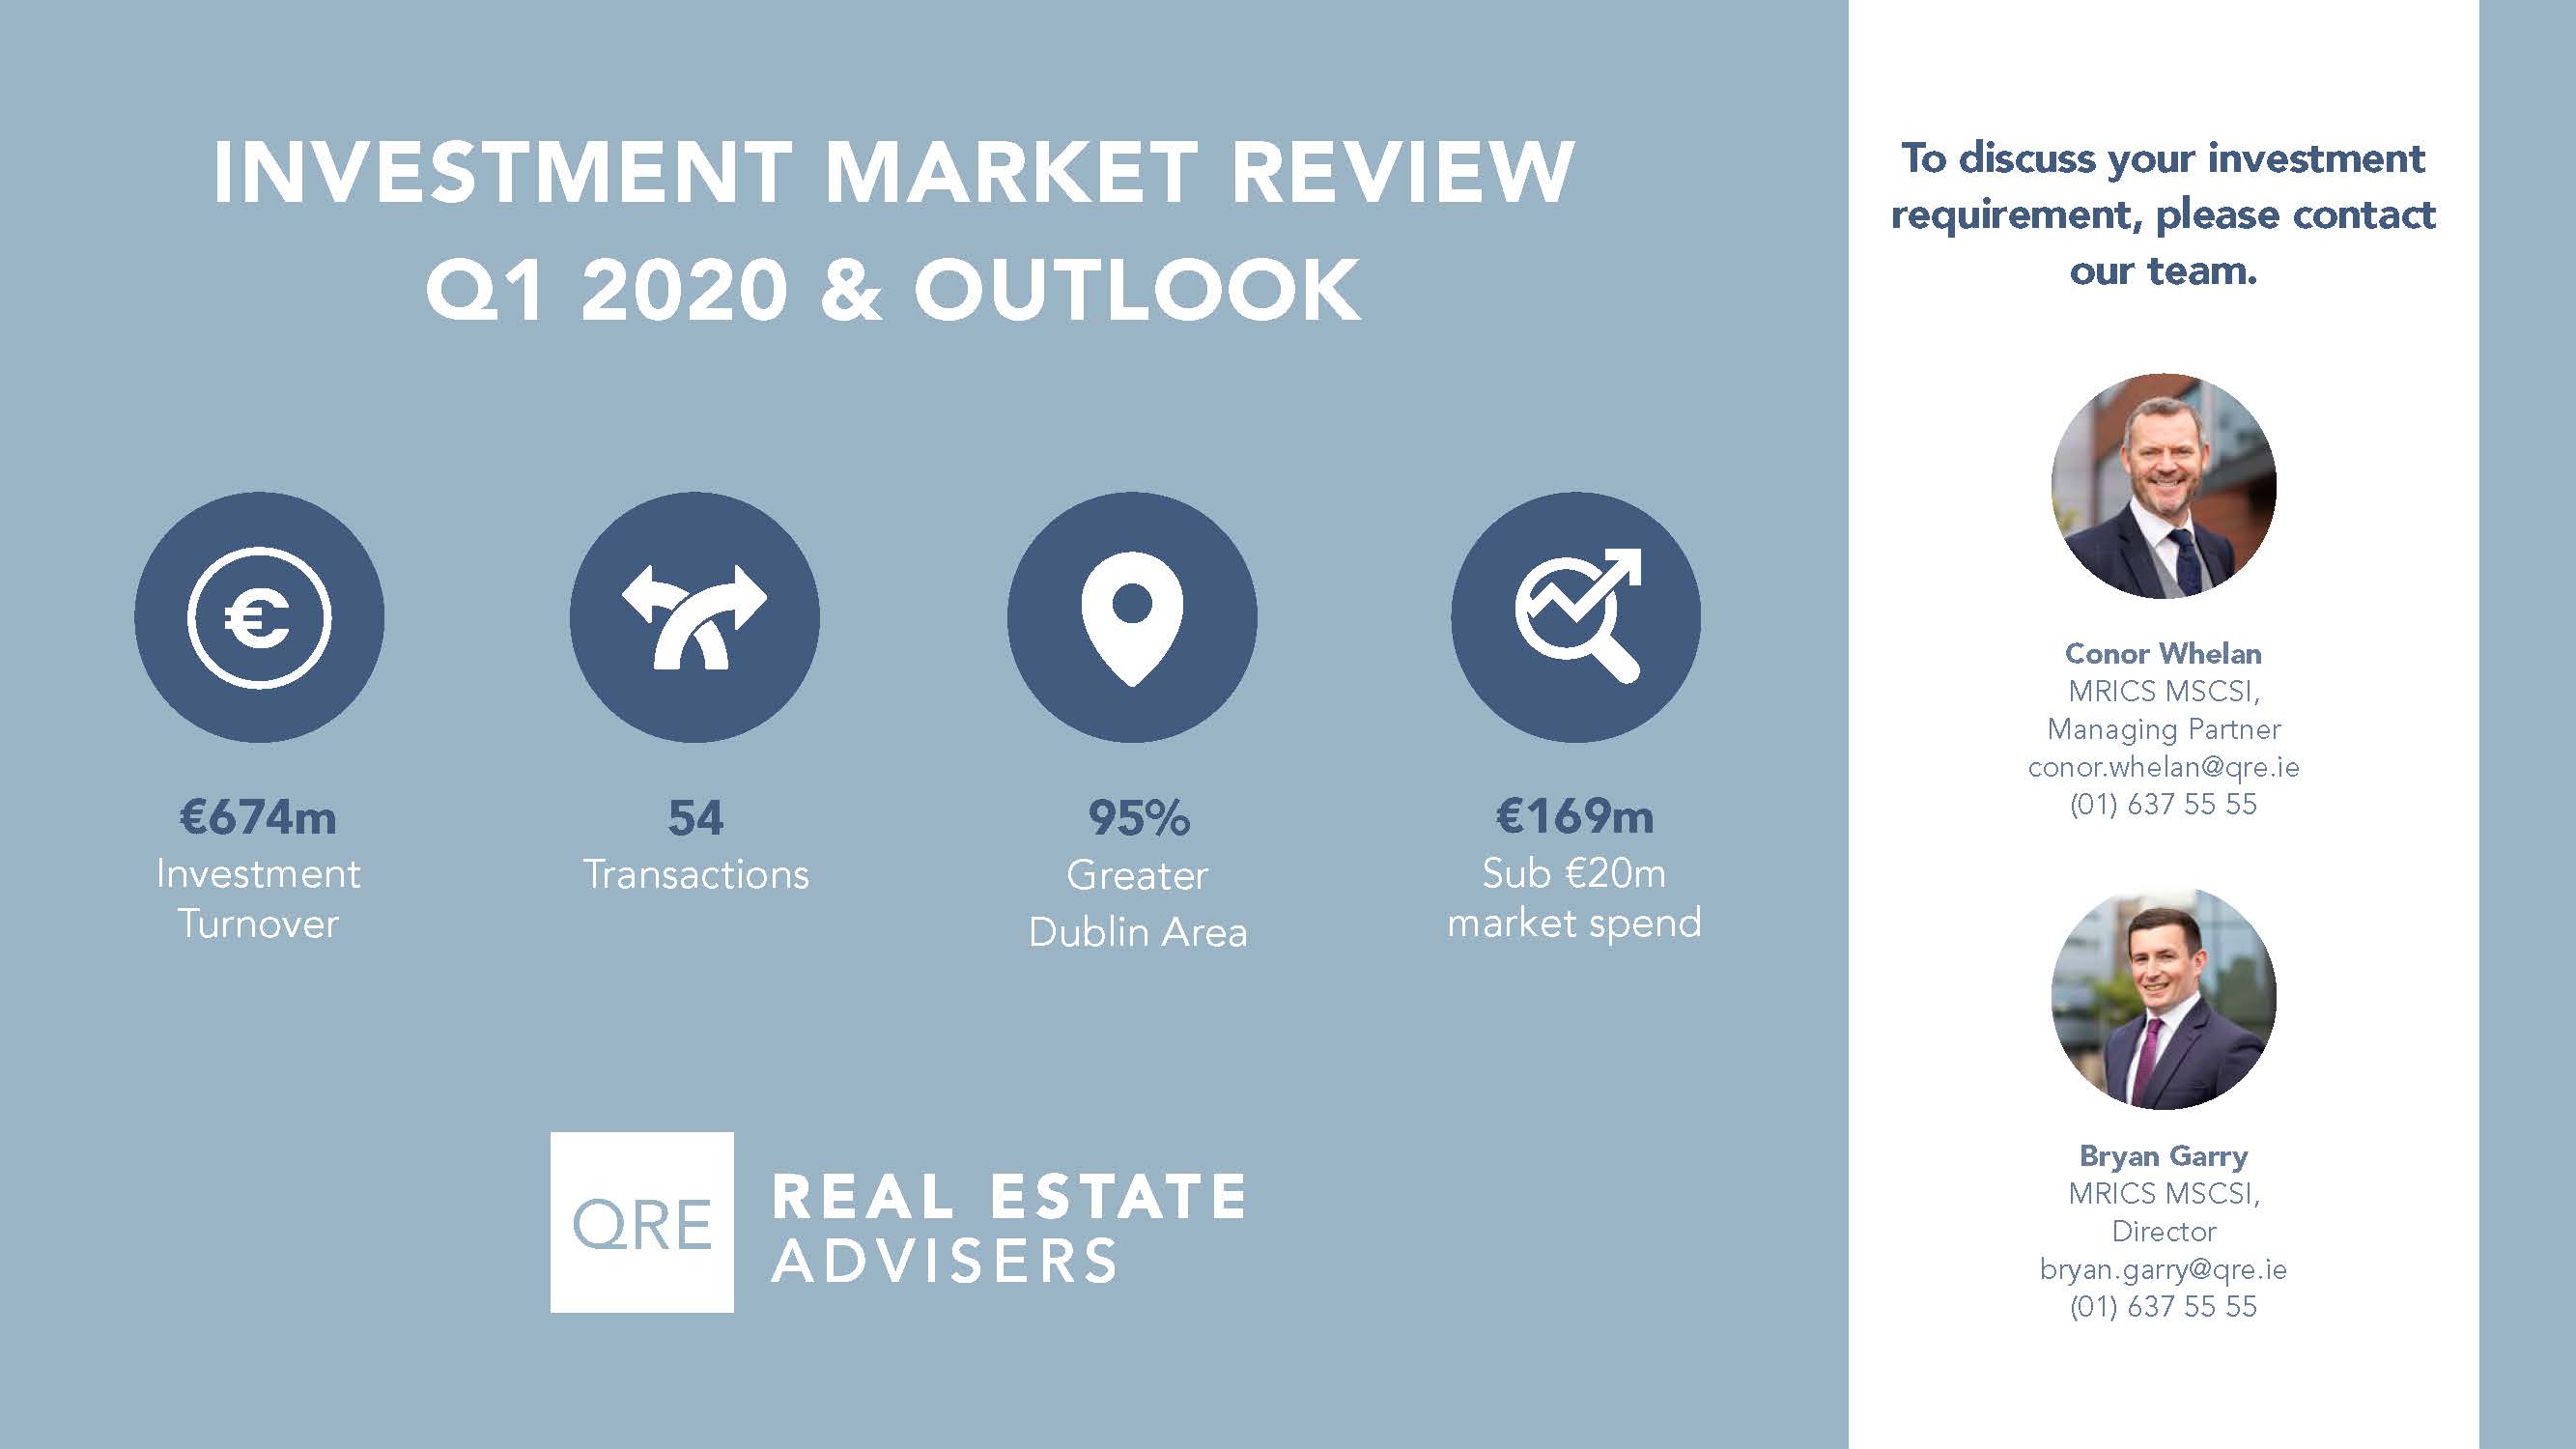 QRE Q1 2020 Investment Market Review